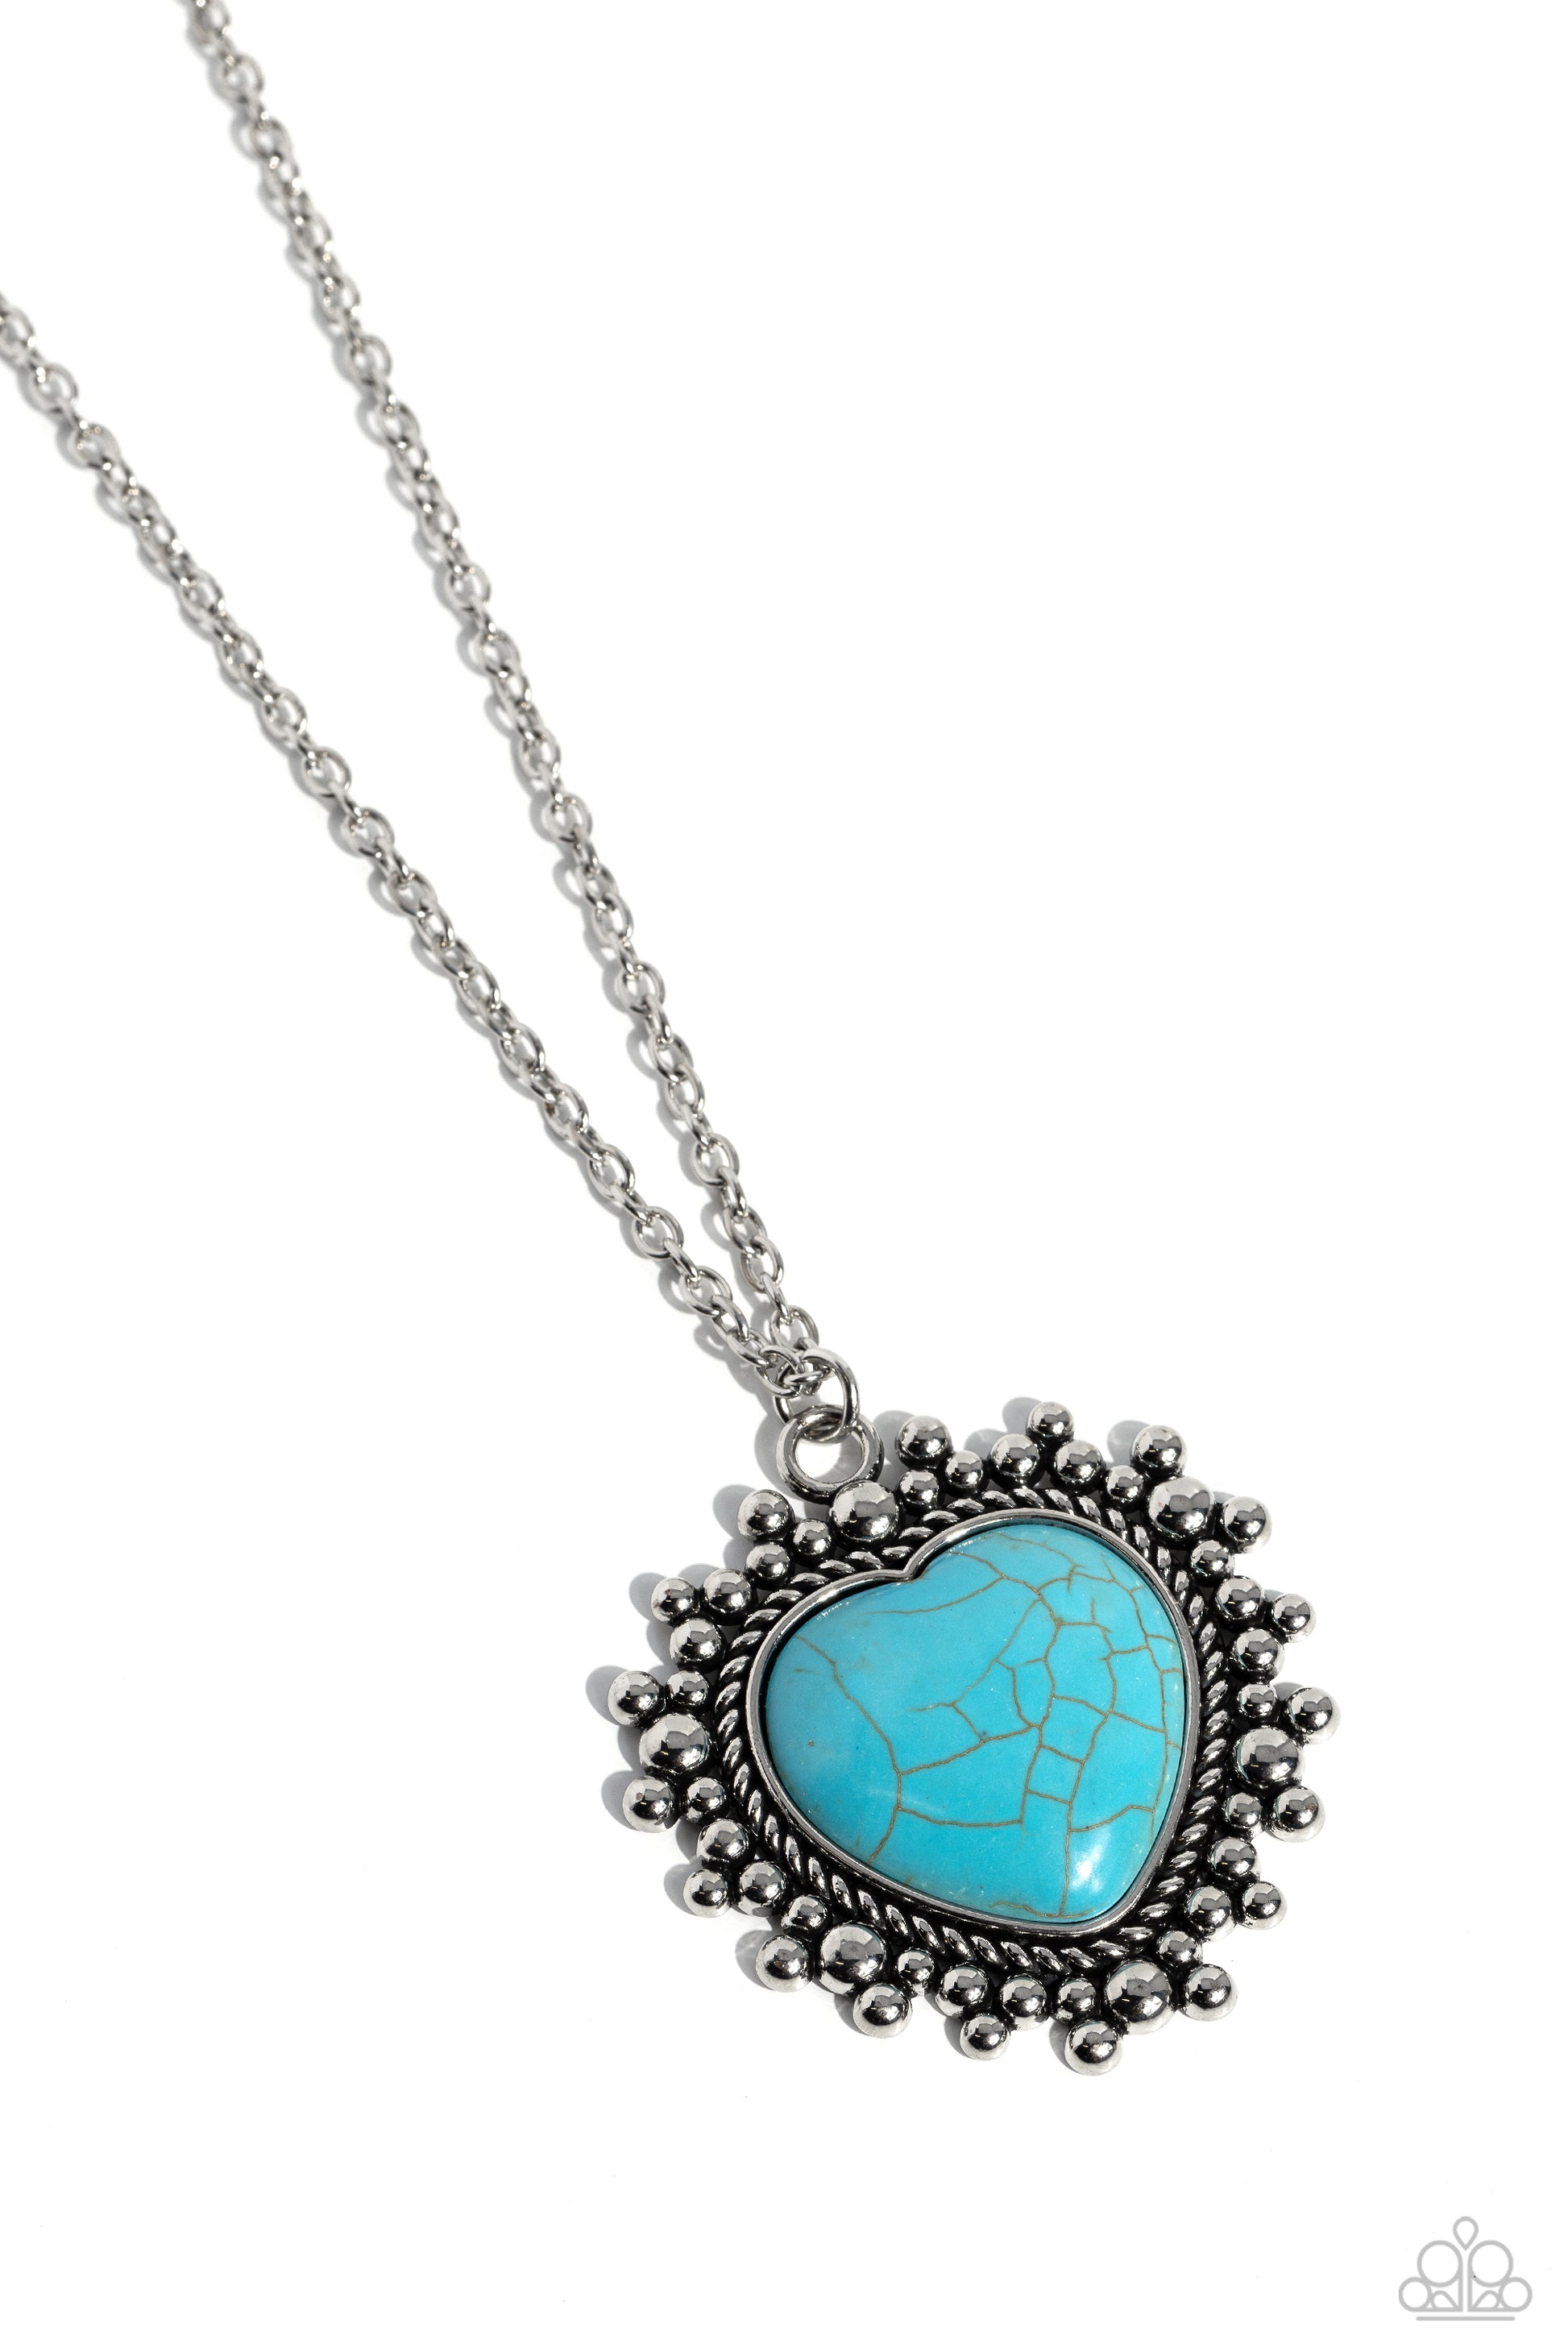 Southwestern Sentiment - blue - Paparazzi necklace